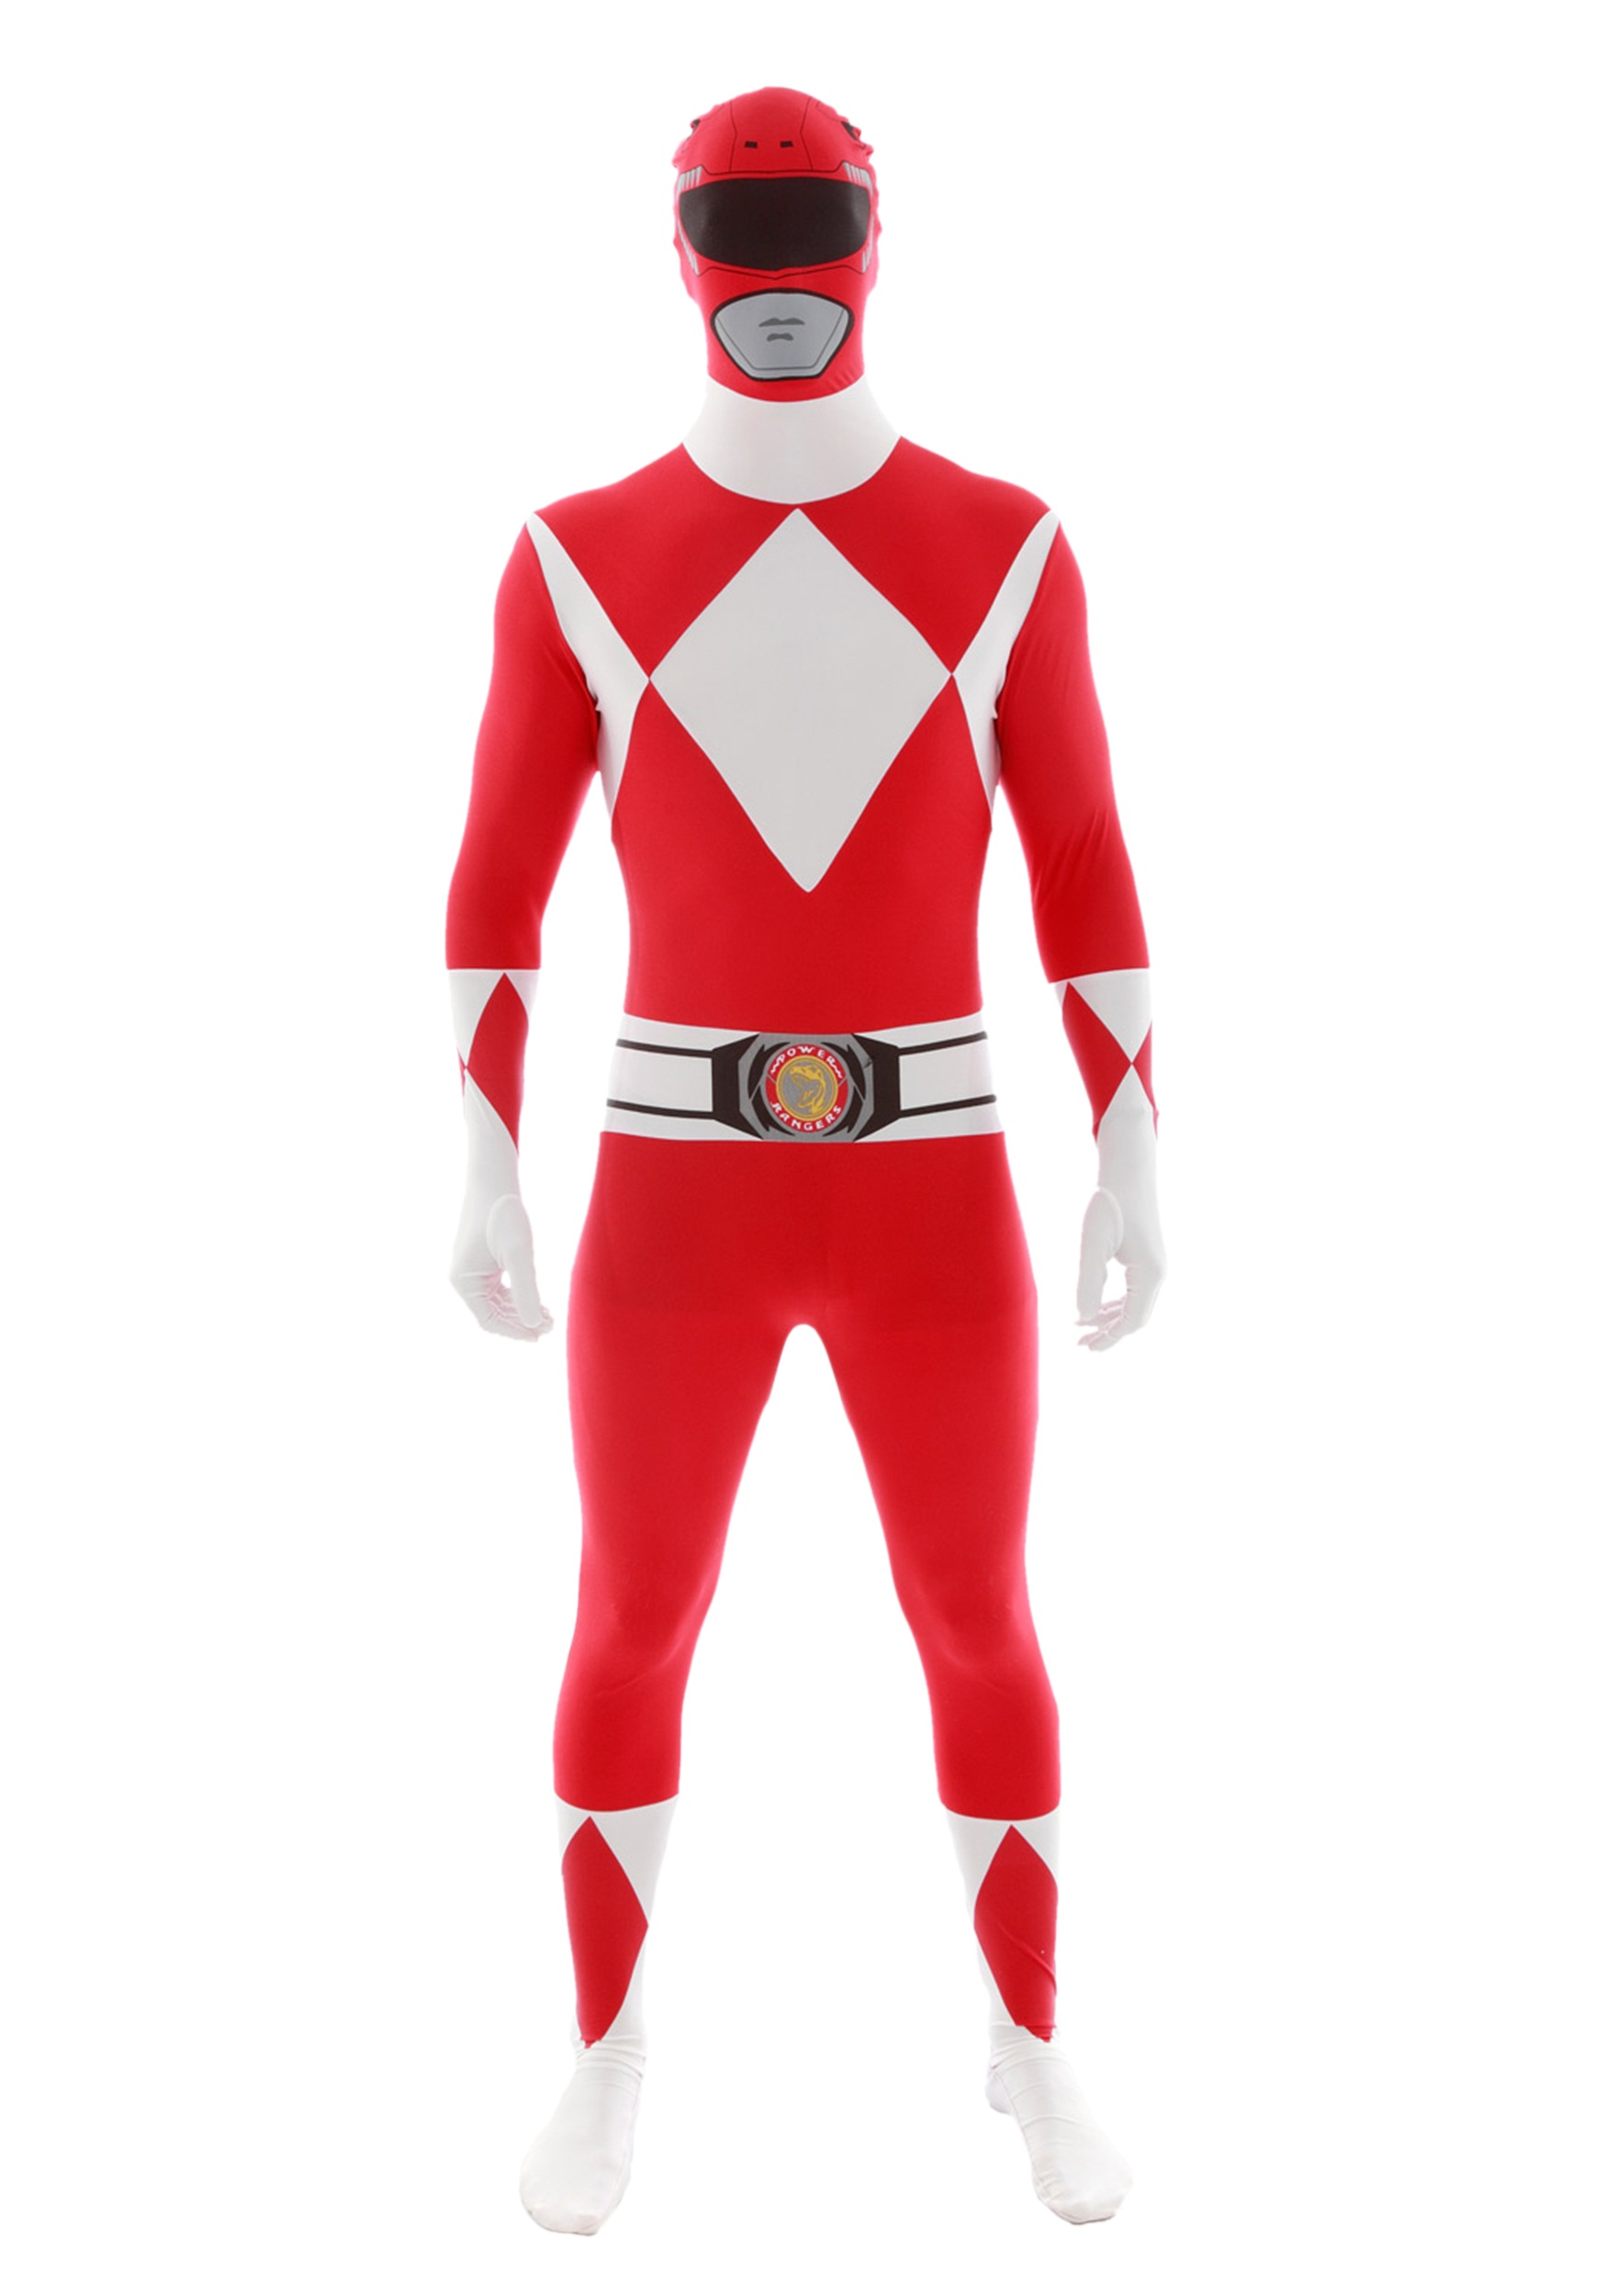 Original Red Power Ranger Costume